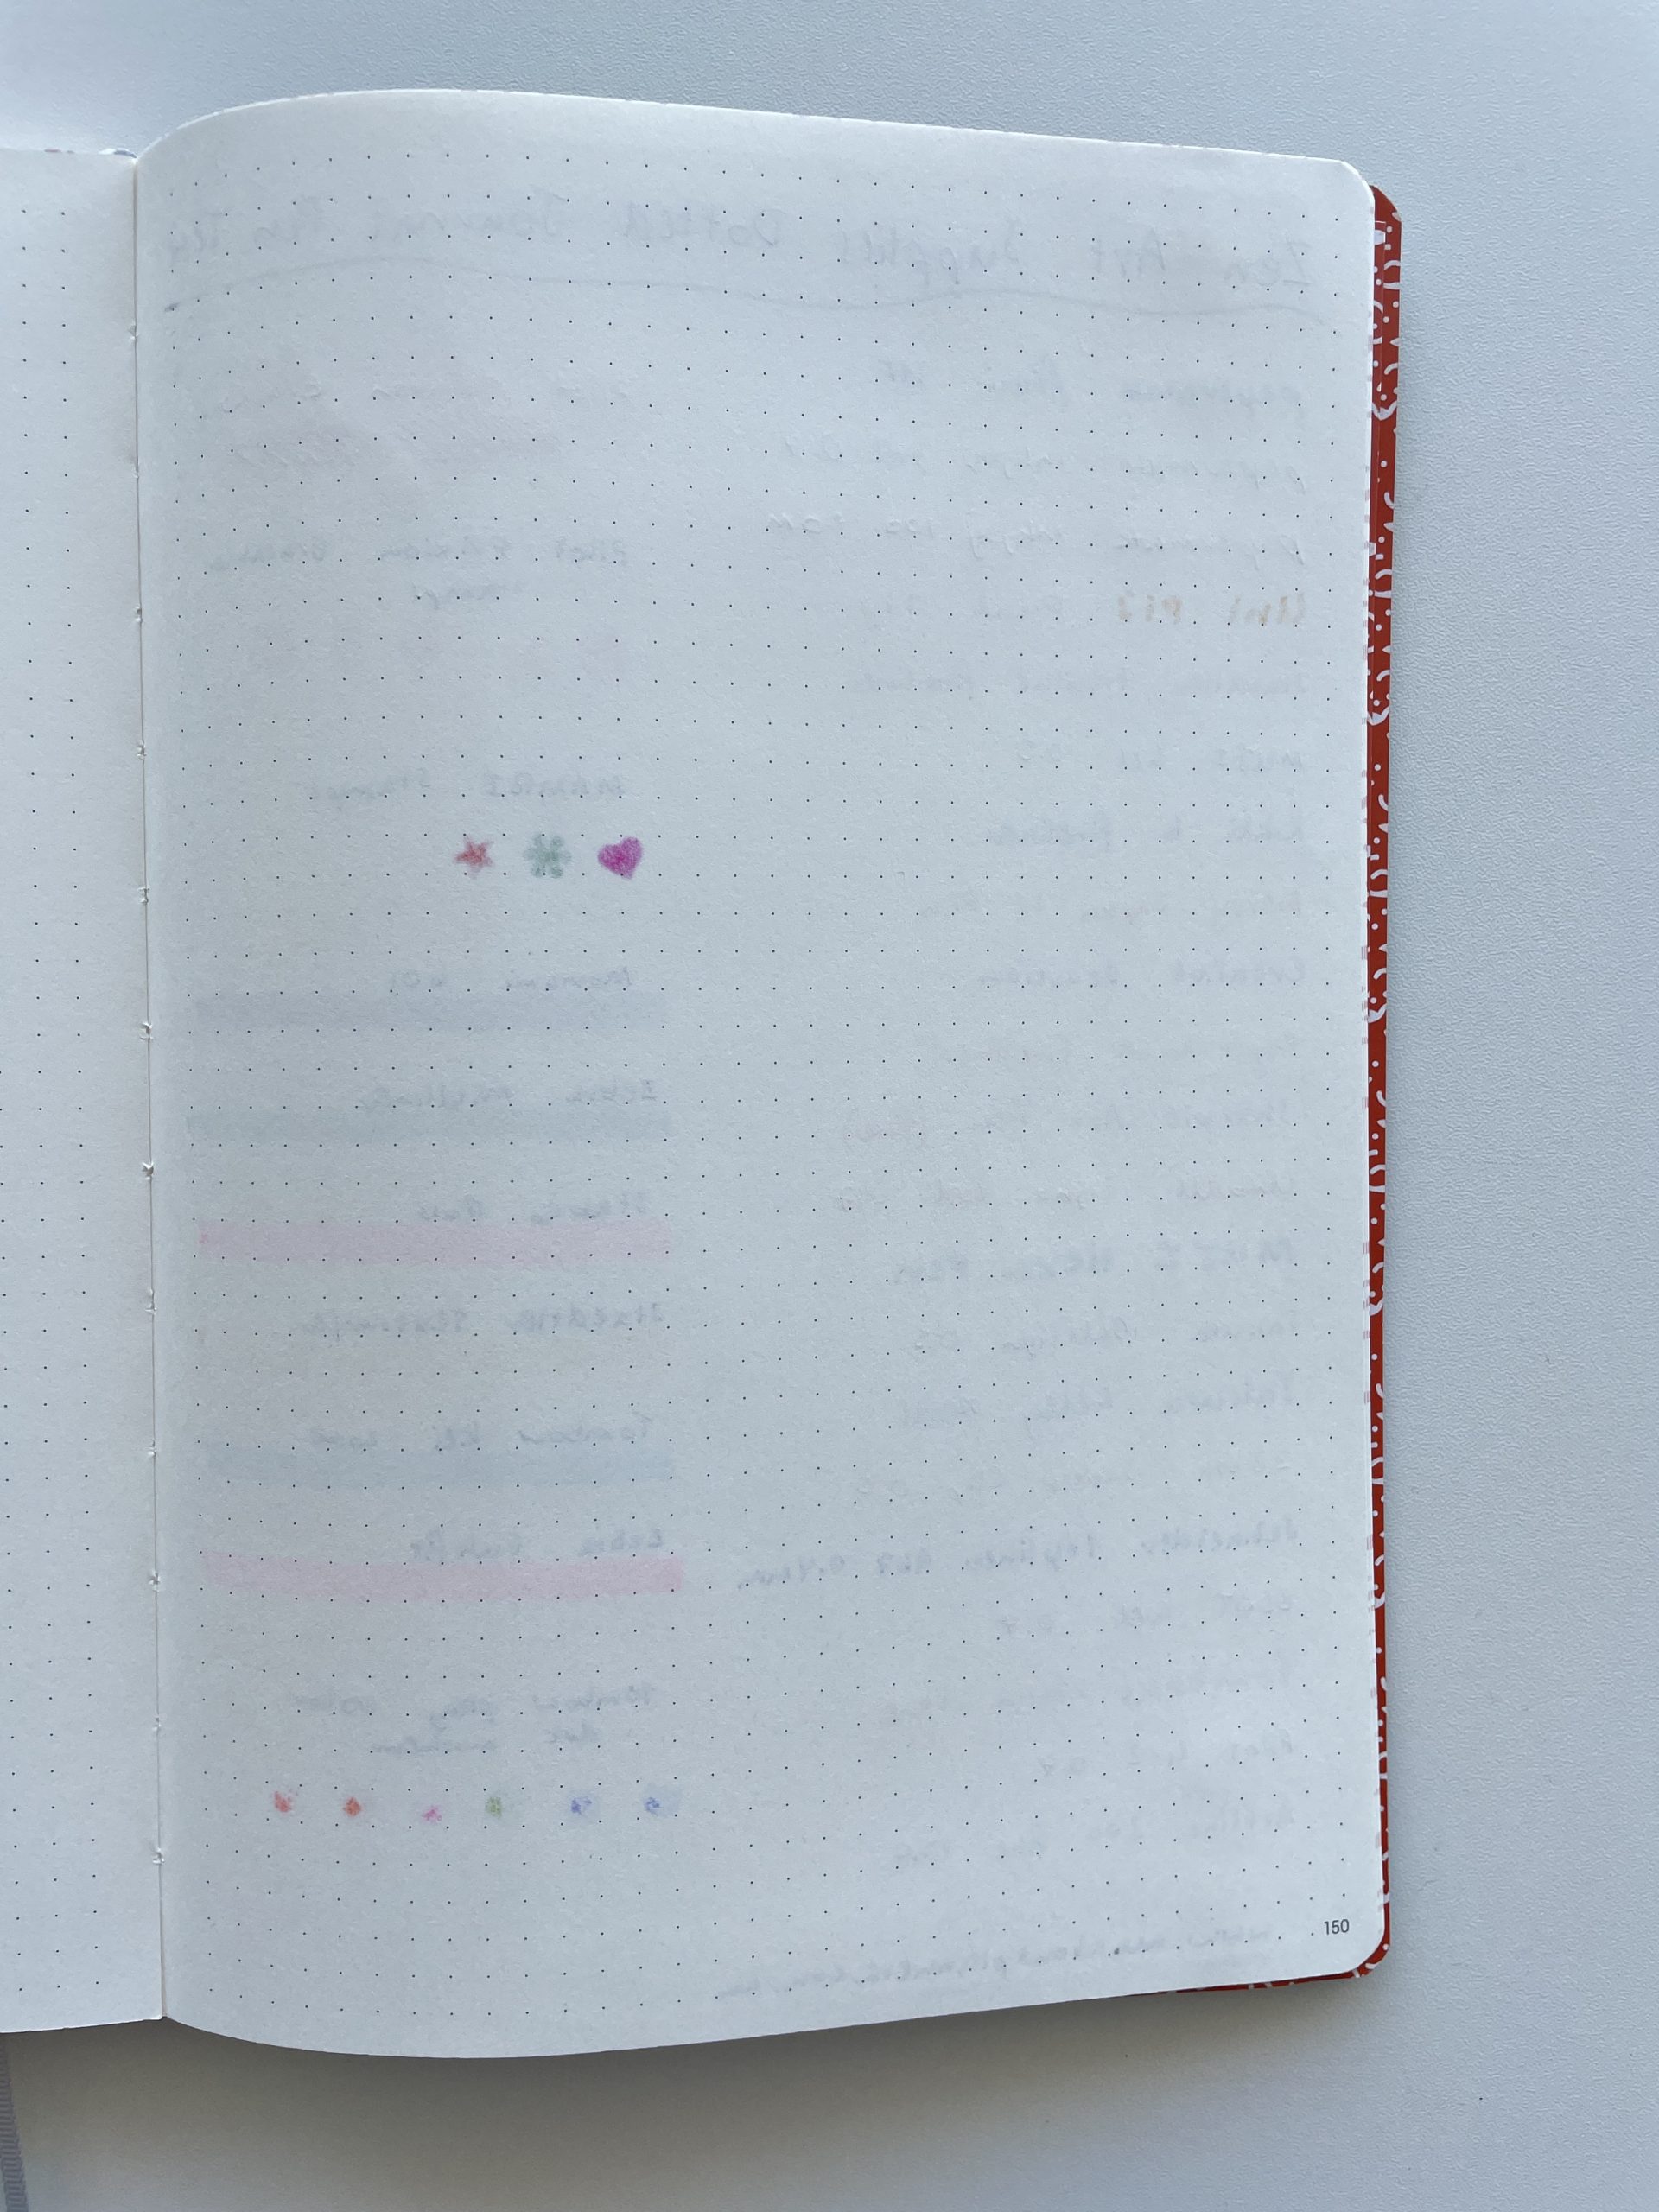 zen art supplies bullet journal dot grid notebook pen testing ghosting bleed through b5 page size large bujo notebook cream paper amazon